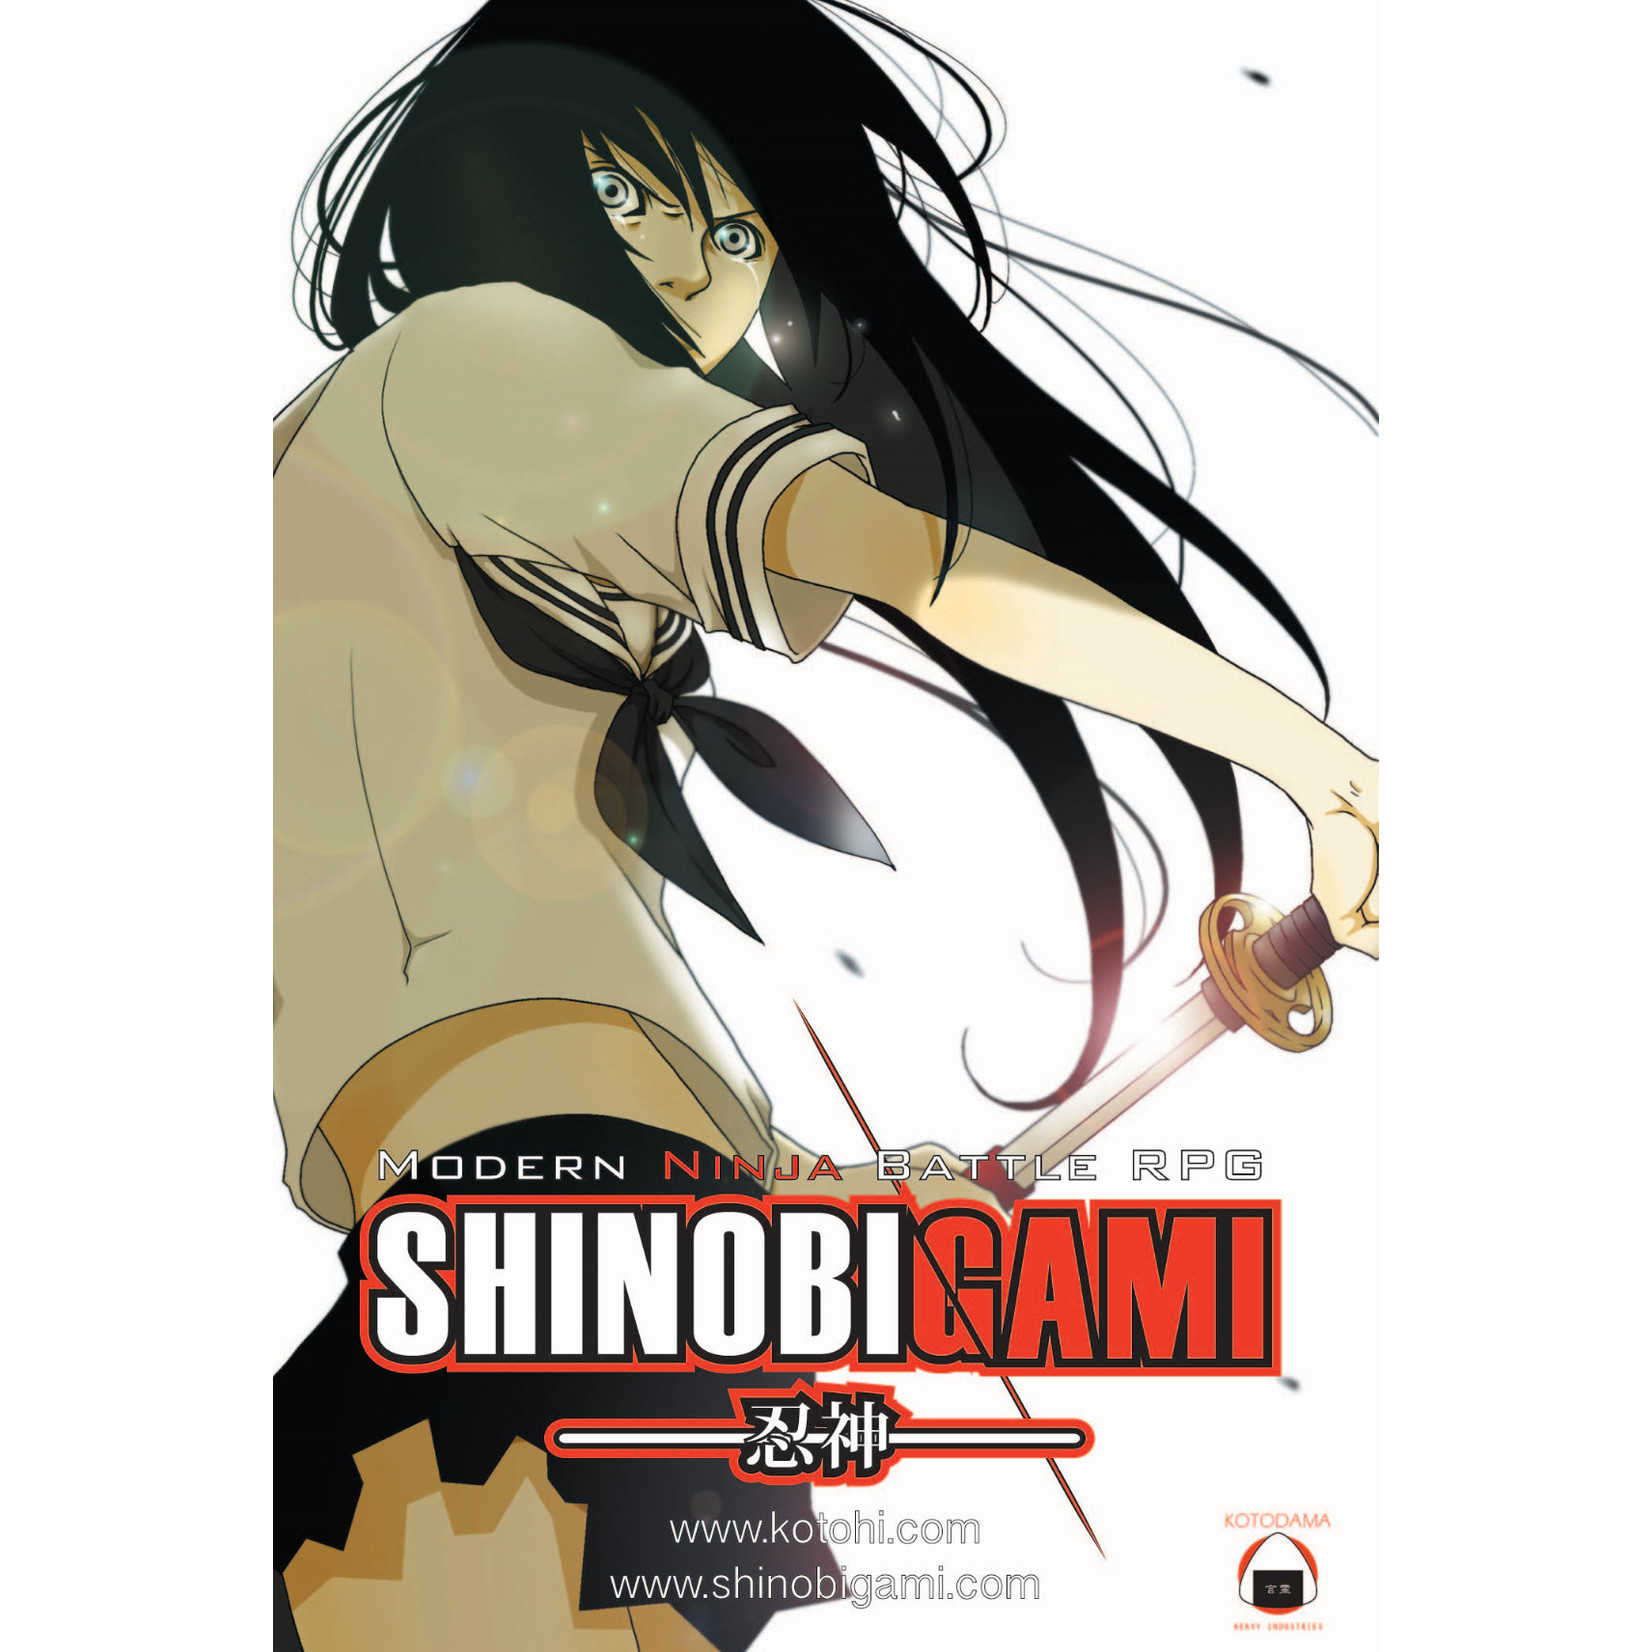 Indie Press Revolution Shinobigami: Modern Ninja Battle RPG